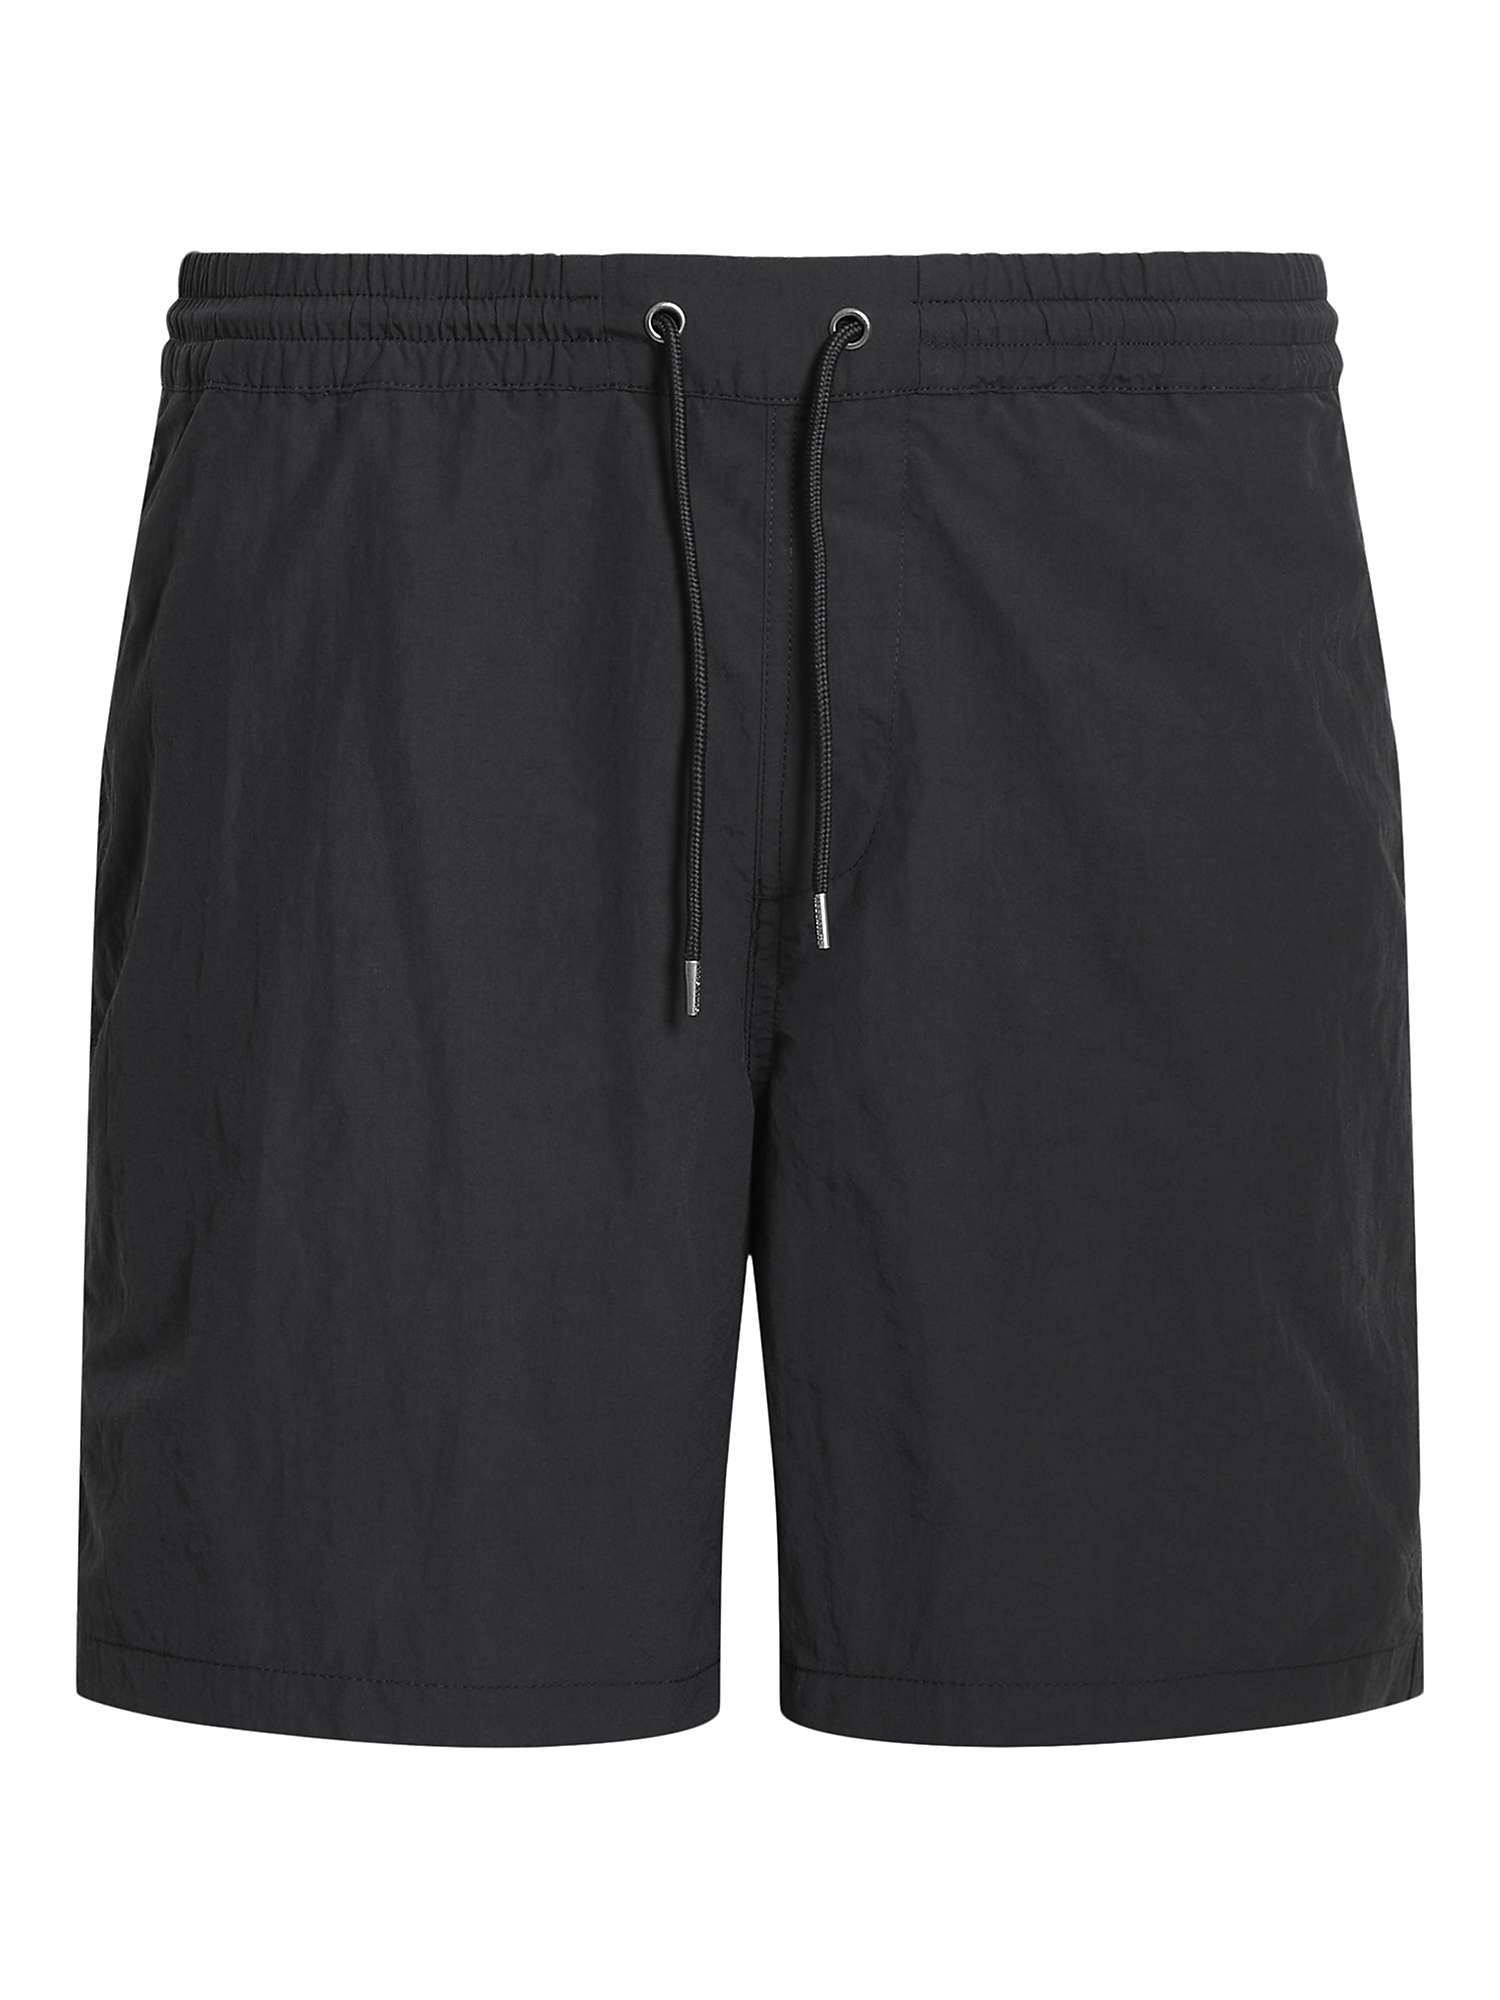 Buy AllSaints Warden Swim Shorts, Jet Black Online at johnlewis.com